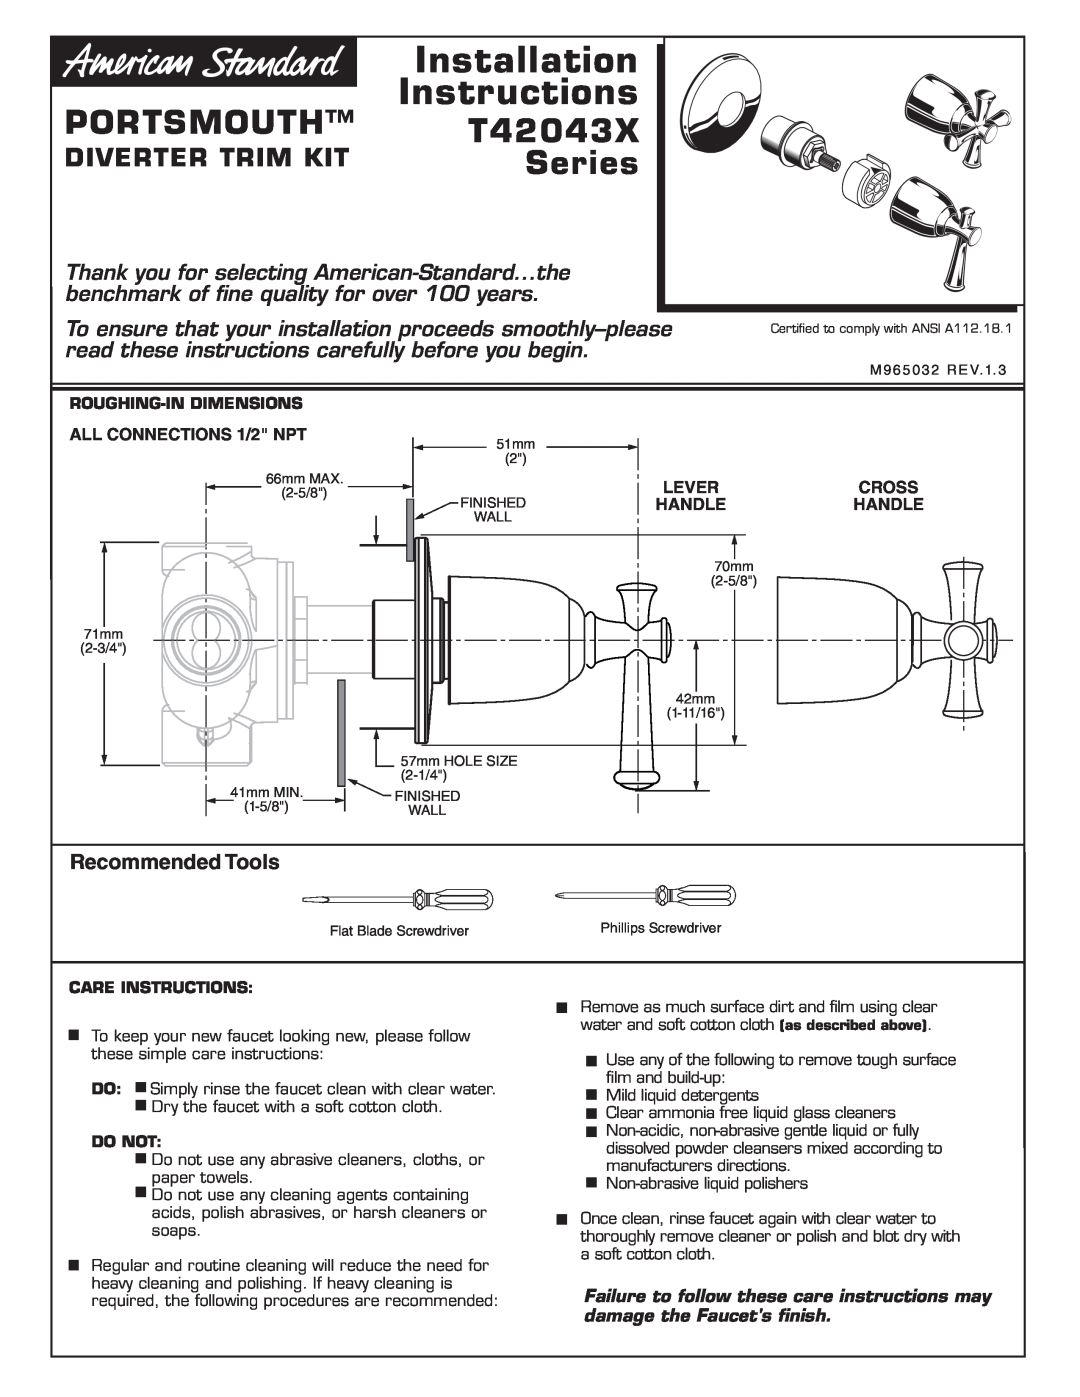 American Standard Diverter Trim Kit installation instructions Installation, Instructions, Portsmouth, T42043X, Series 